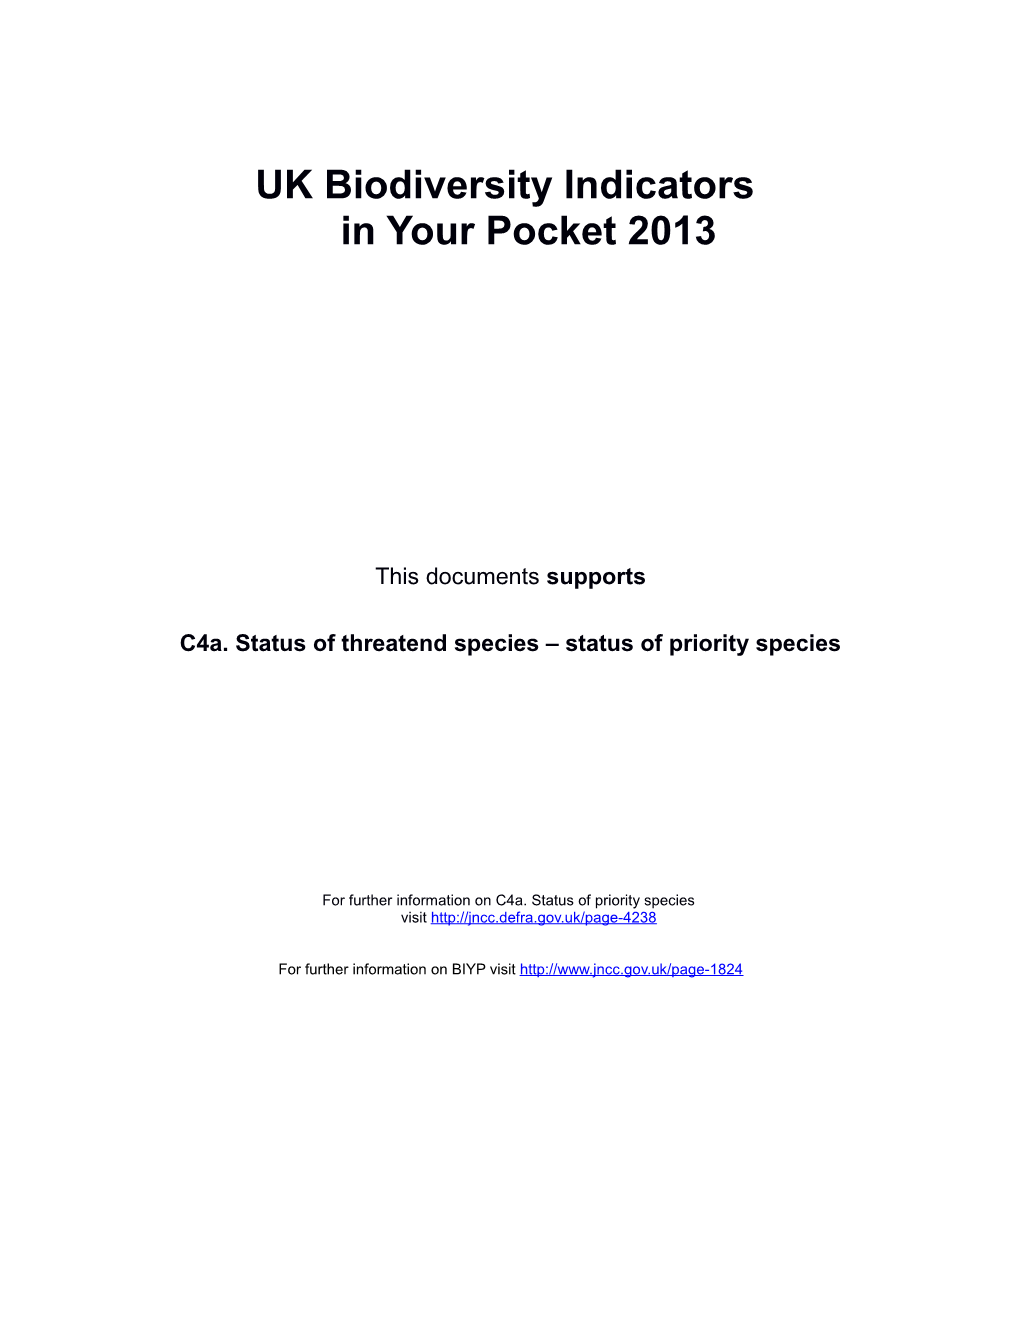 UK Biodiversity Indicators in Your Pocket 2013